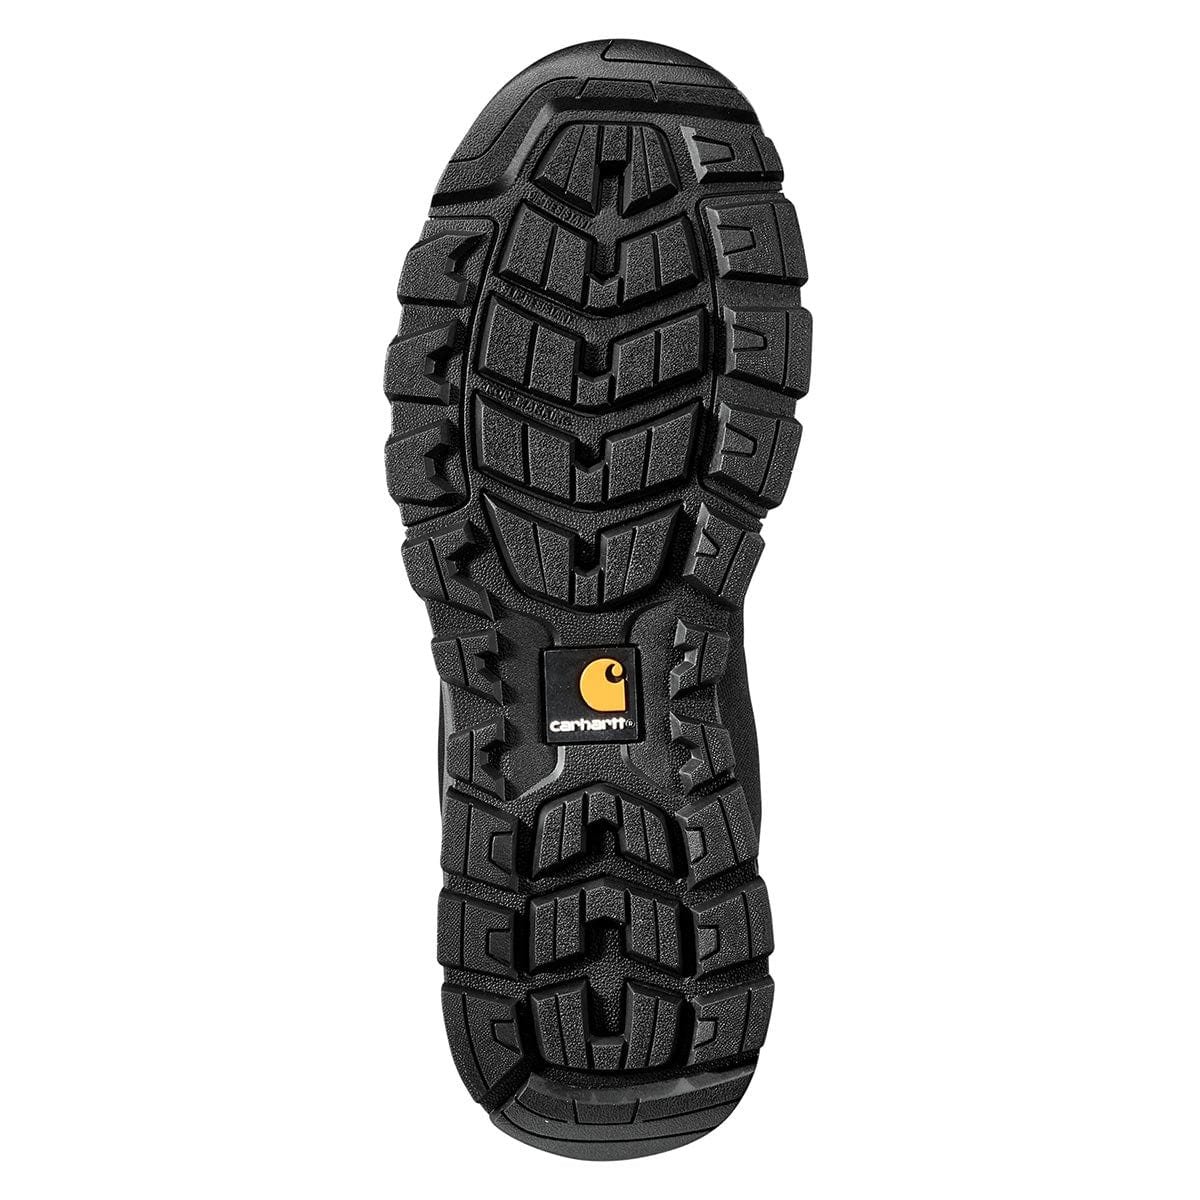 Carhartt Men's Utility 5" Hiker Boots - Black